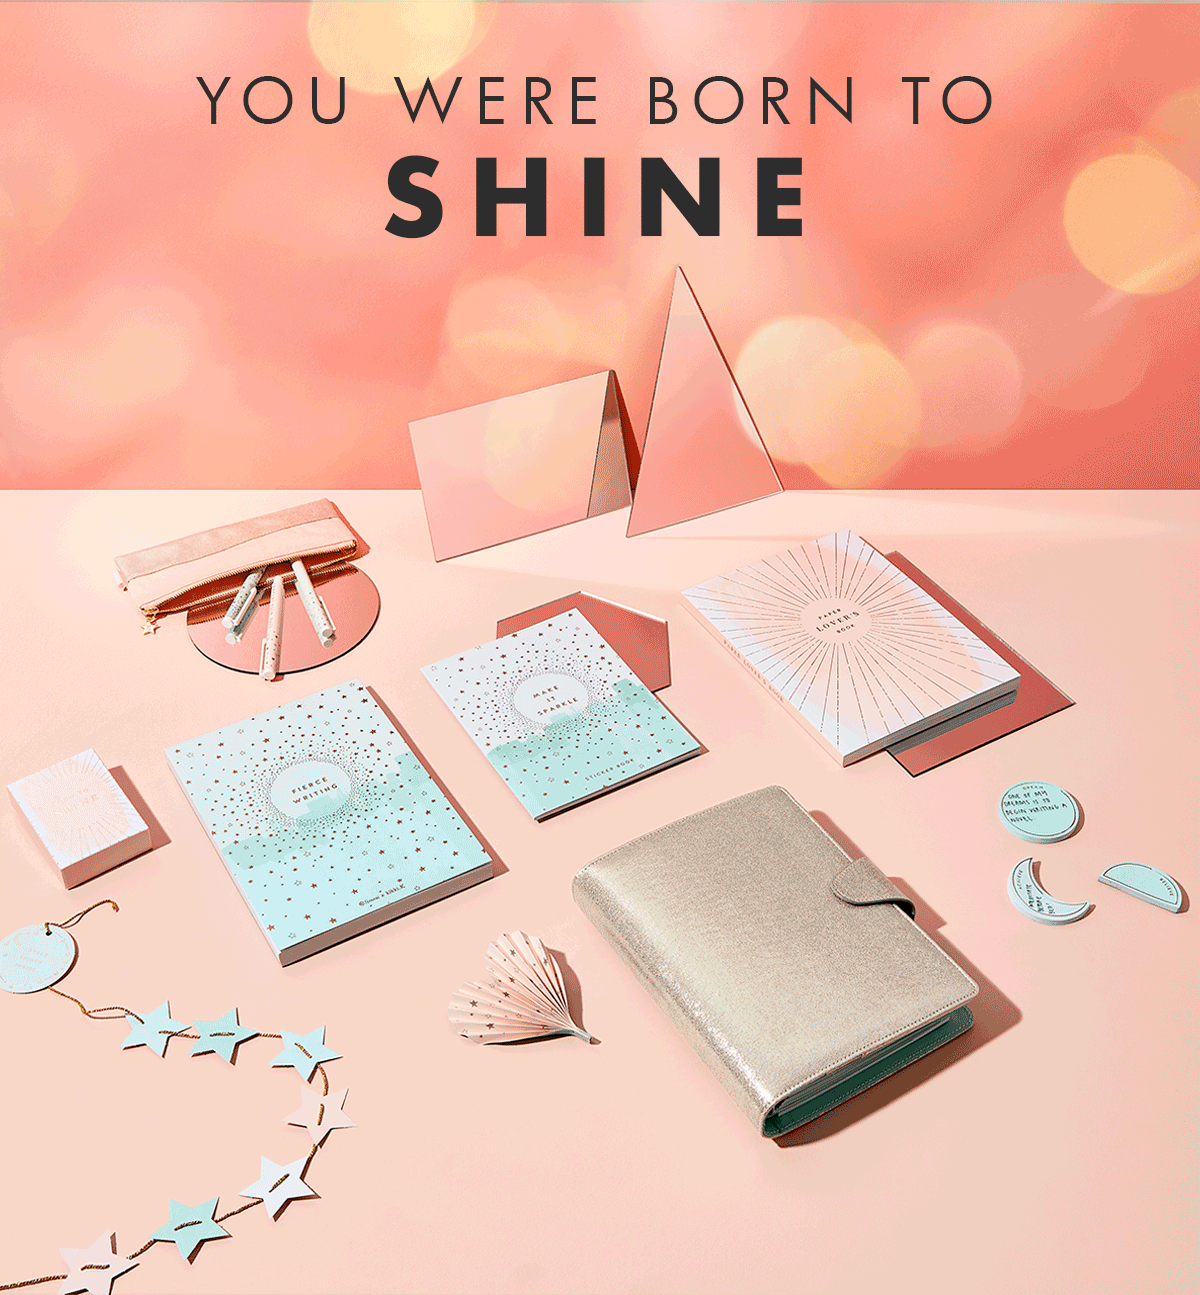 You were born to shine.